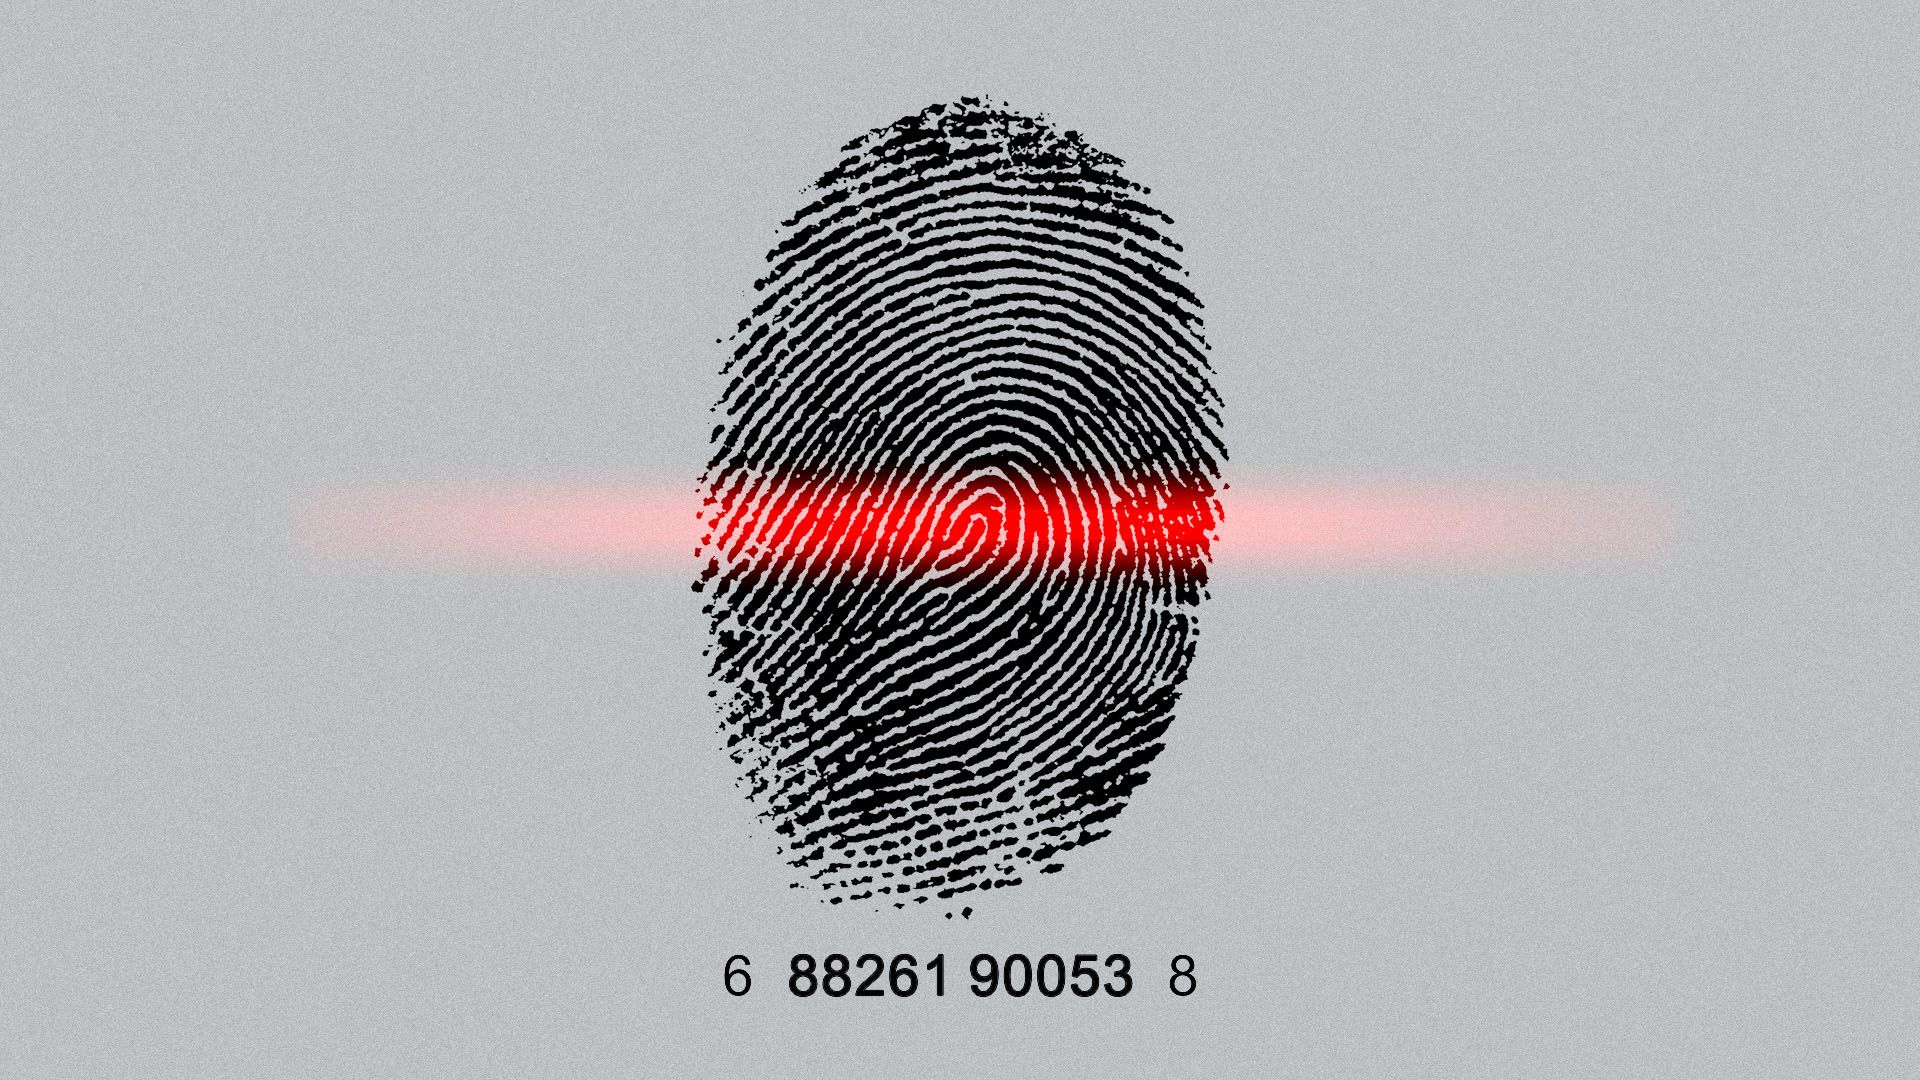 Illustration of a fingerprint as a barcode